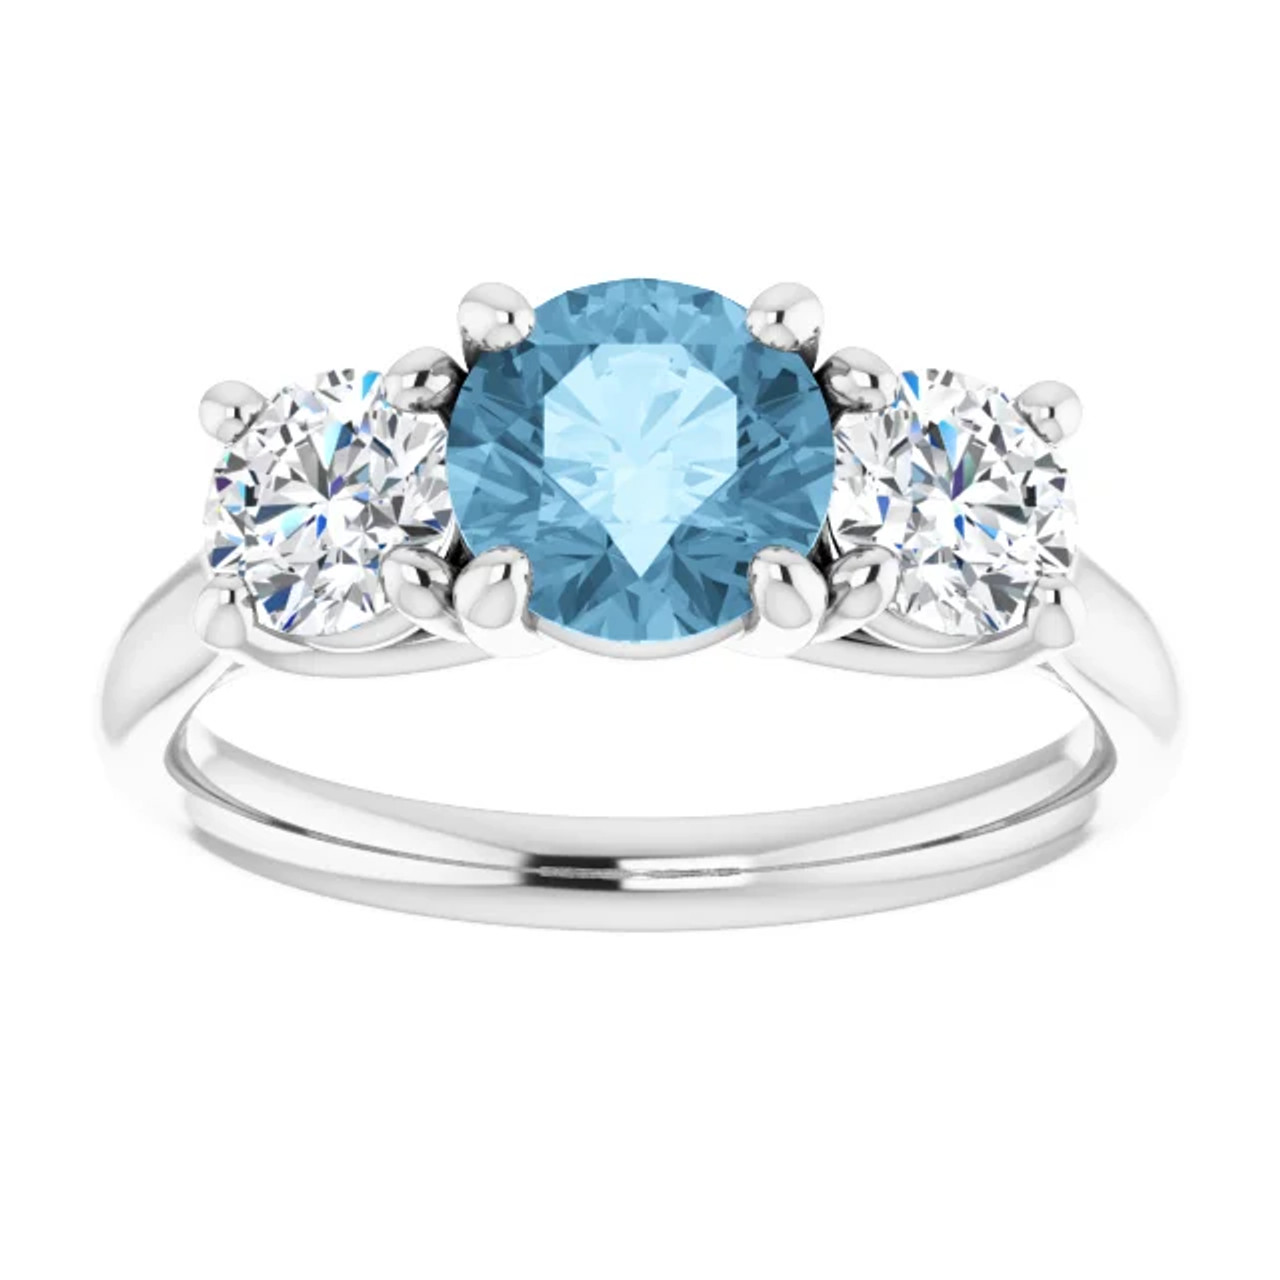 London Blue Topaz & White Topaz Ring 925 Sterling Silver Ring at Rs 2099 |  नीली टापज़ रिंग in Jaipur | ID: 20864684273